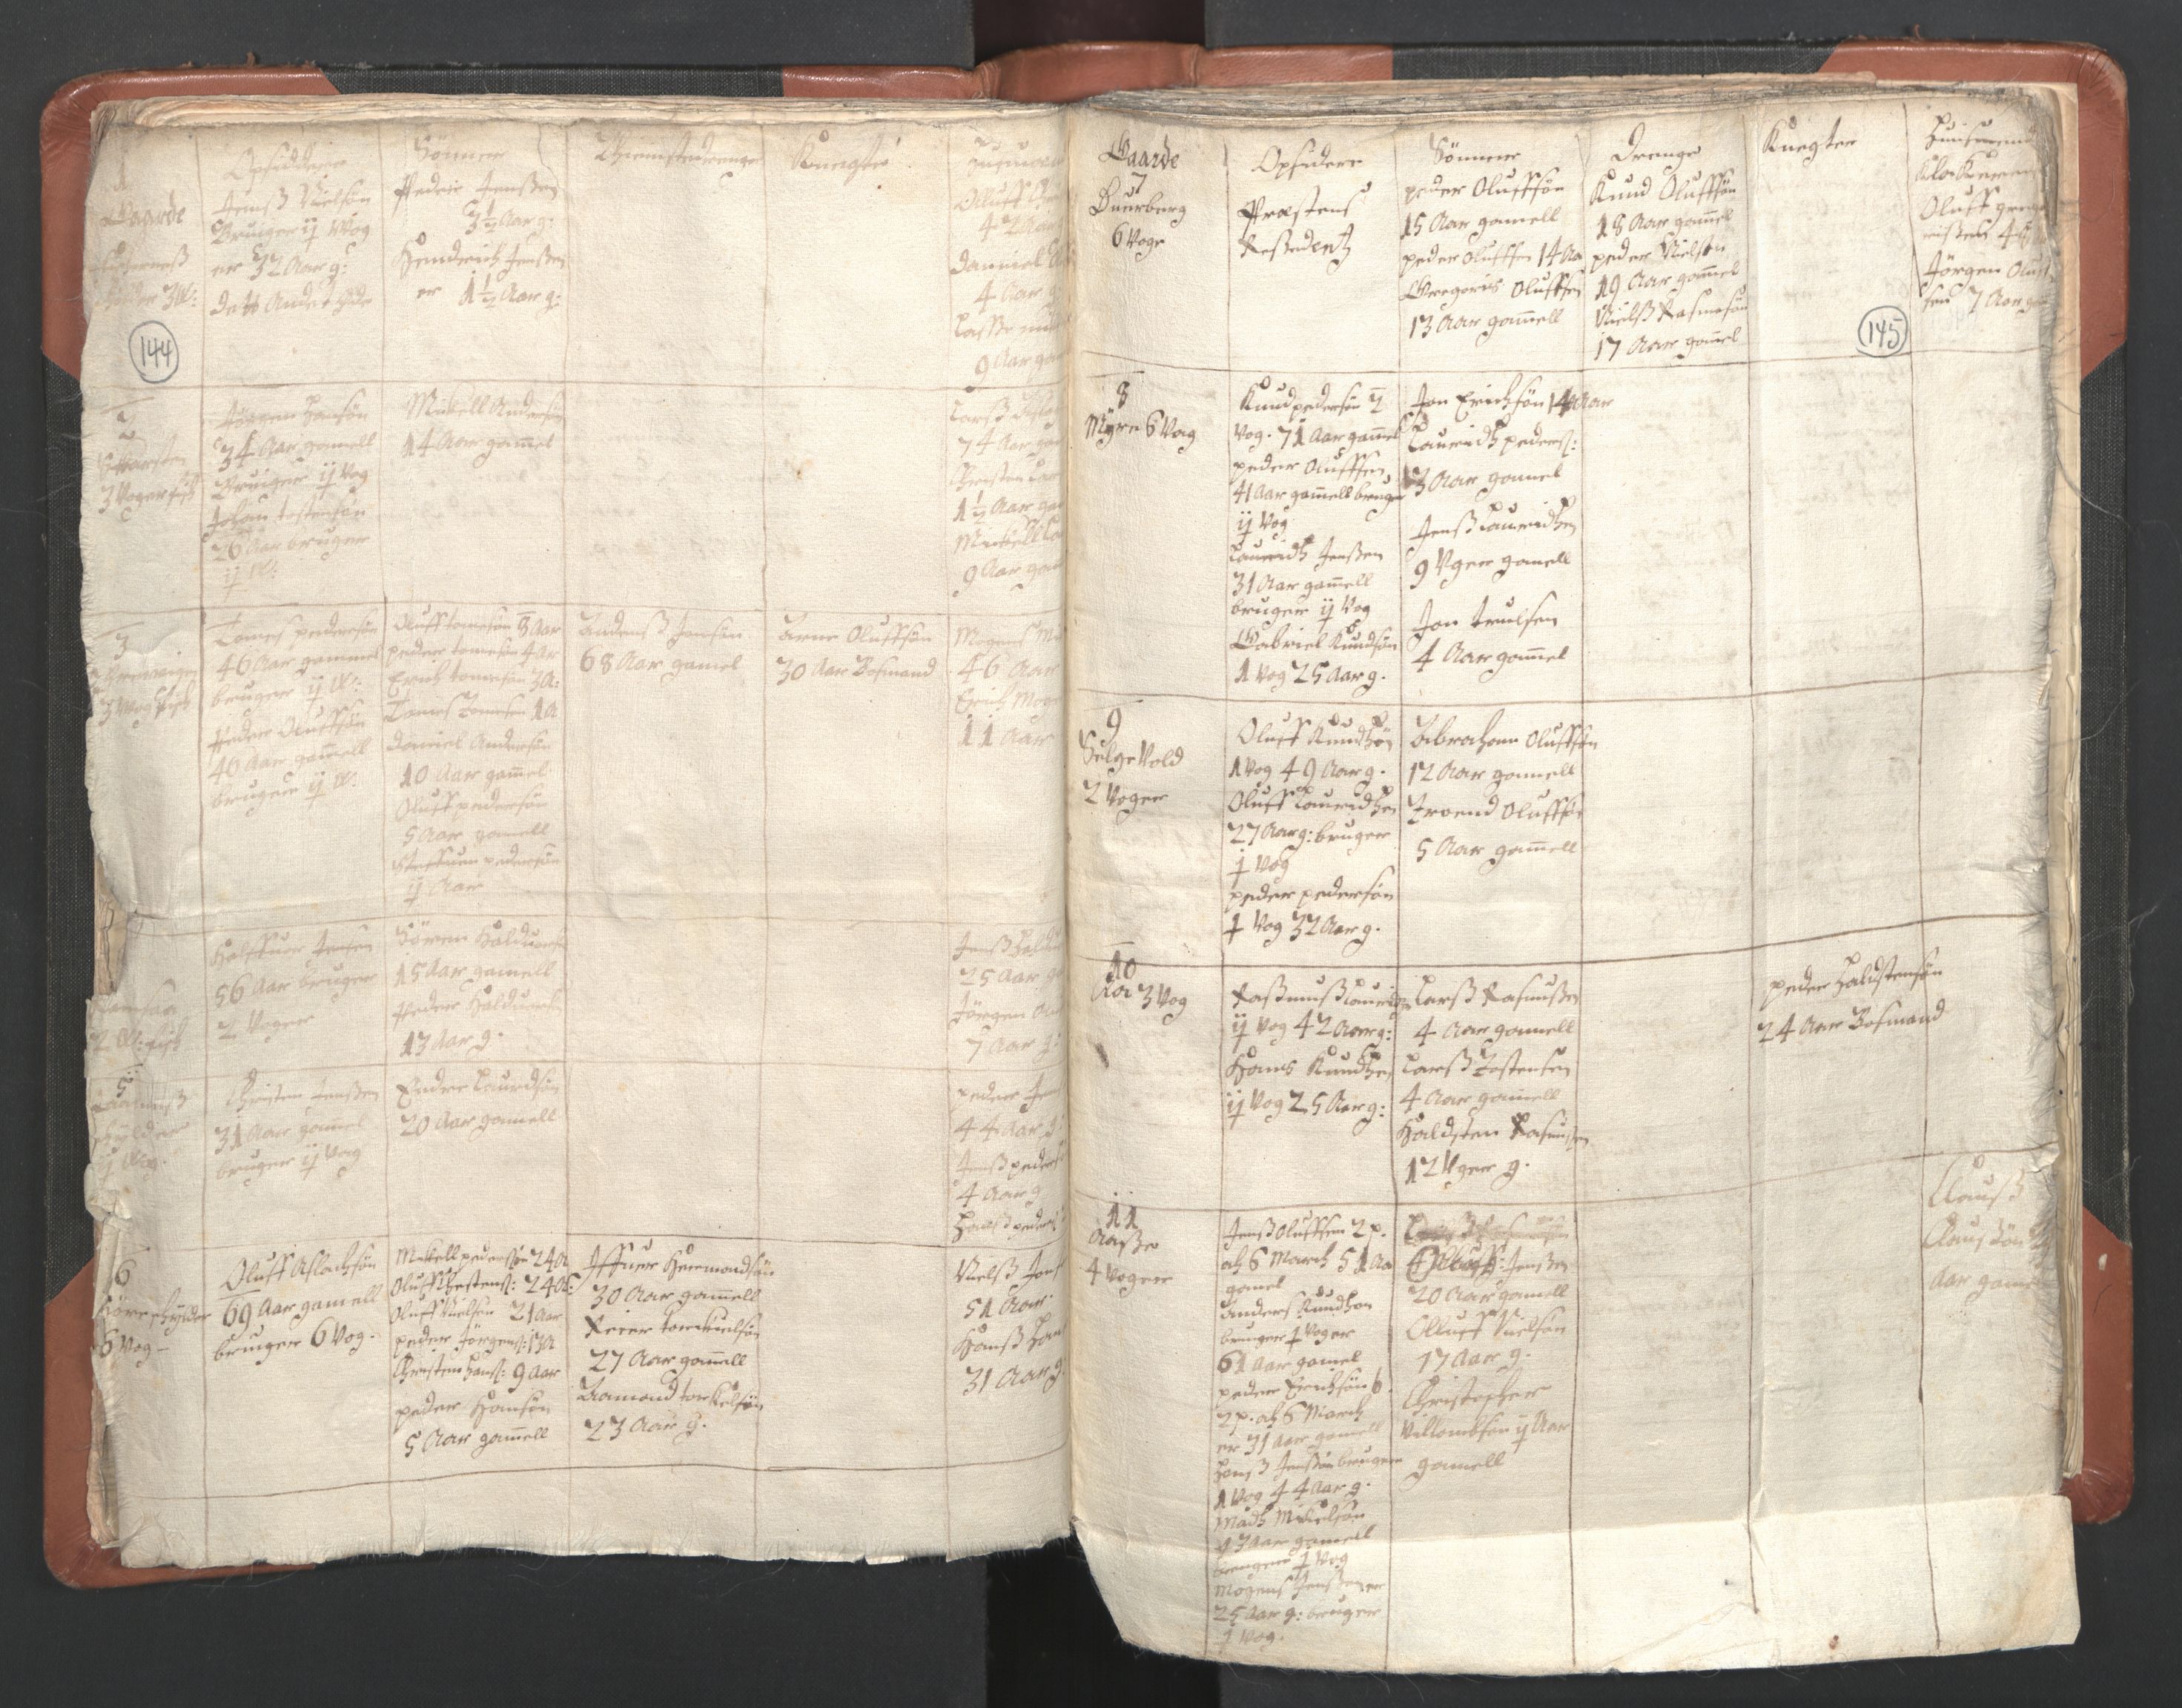 RA, Vicar's Census 1664-1666, no. 36: Lofoten and Vesterålen deanery, Senja deanery and Troms deanery, 1664-1666, p. 144-145